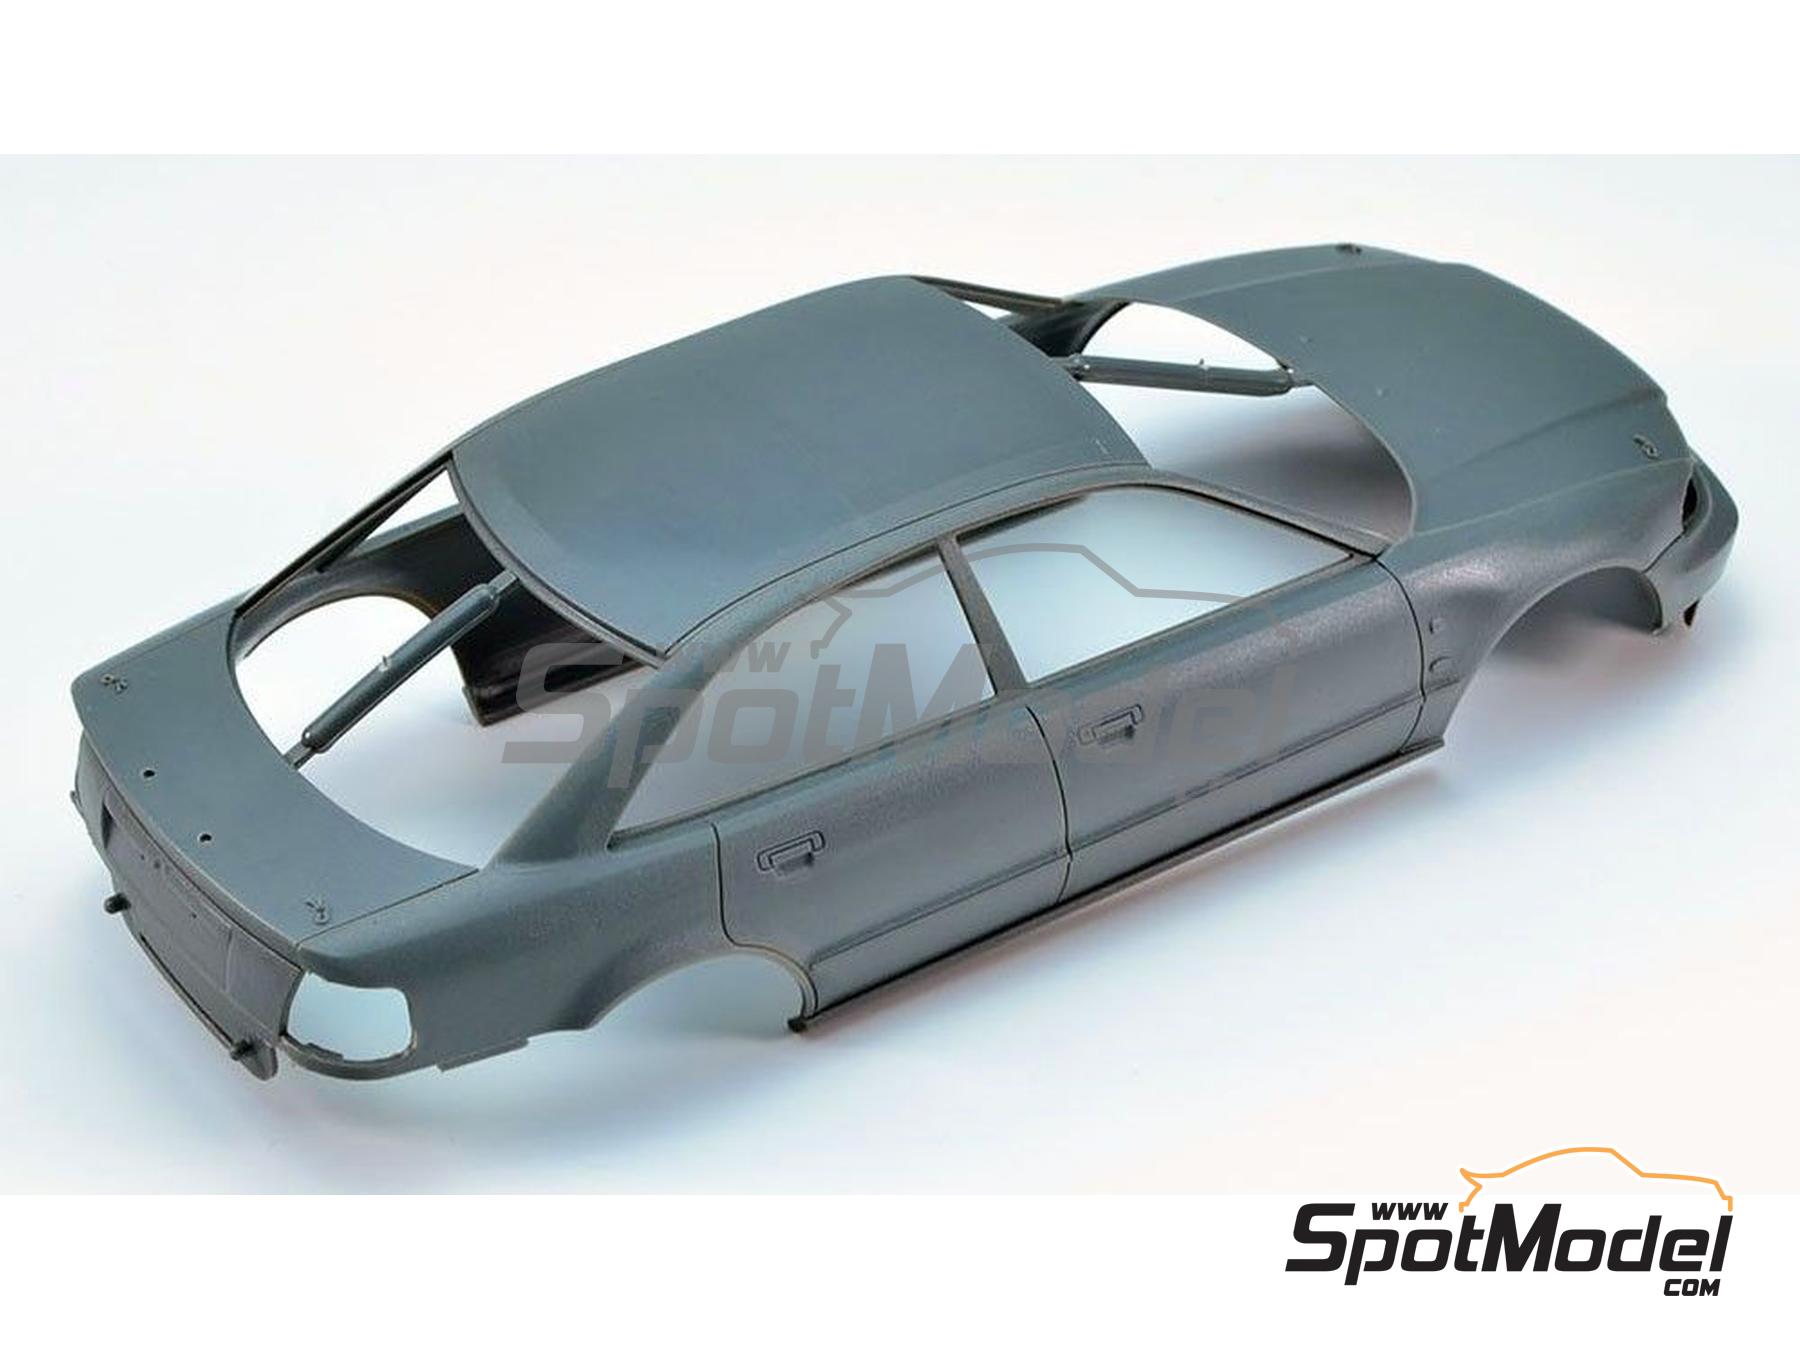 Detail Up A4 Size black Carbon fiber Racing Car Model Kit Water Slide Decal 